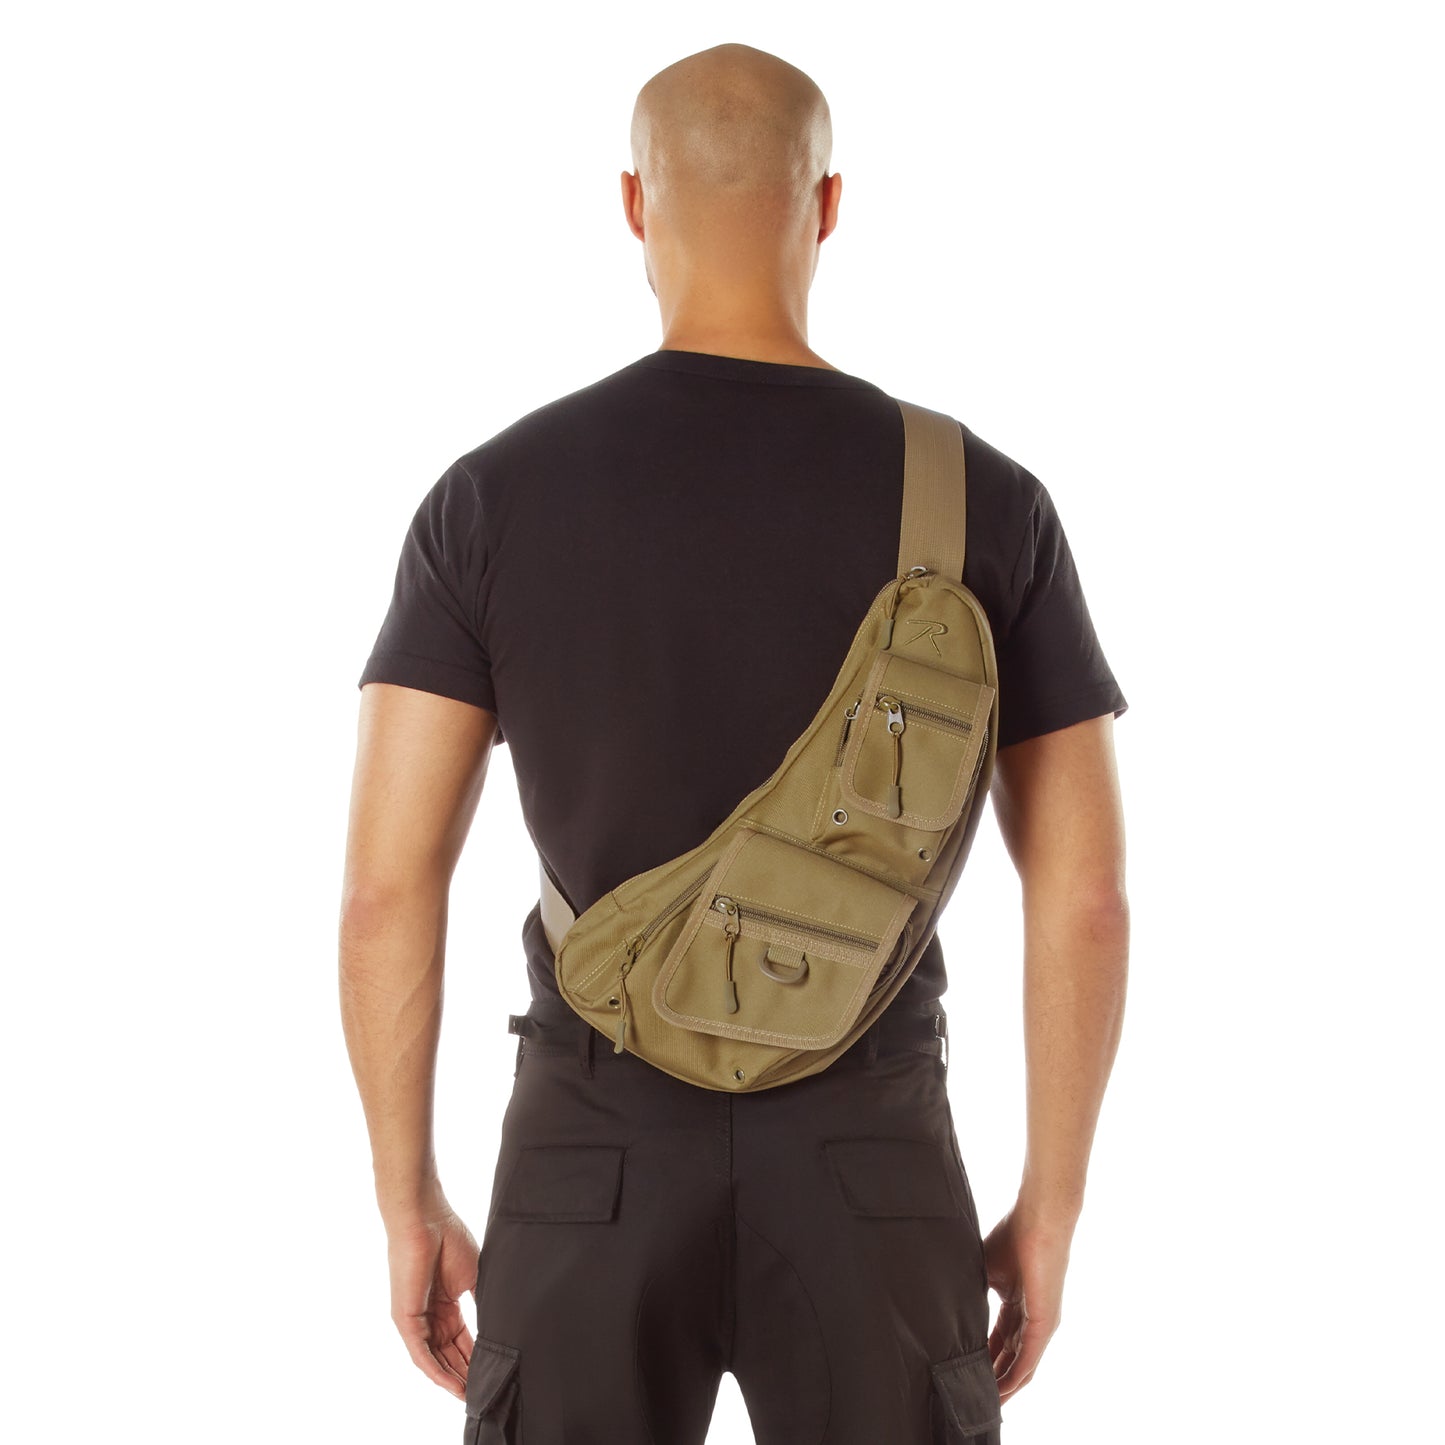 Rothco Tactical Crossbody Bag